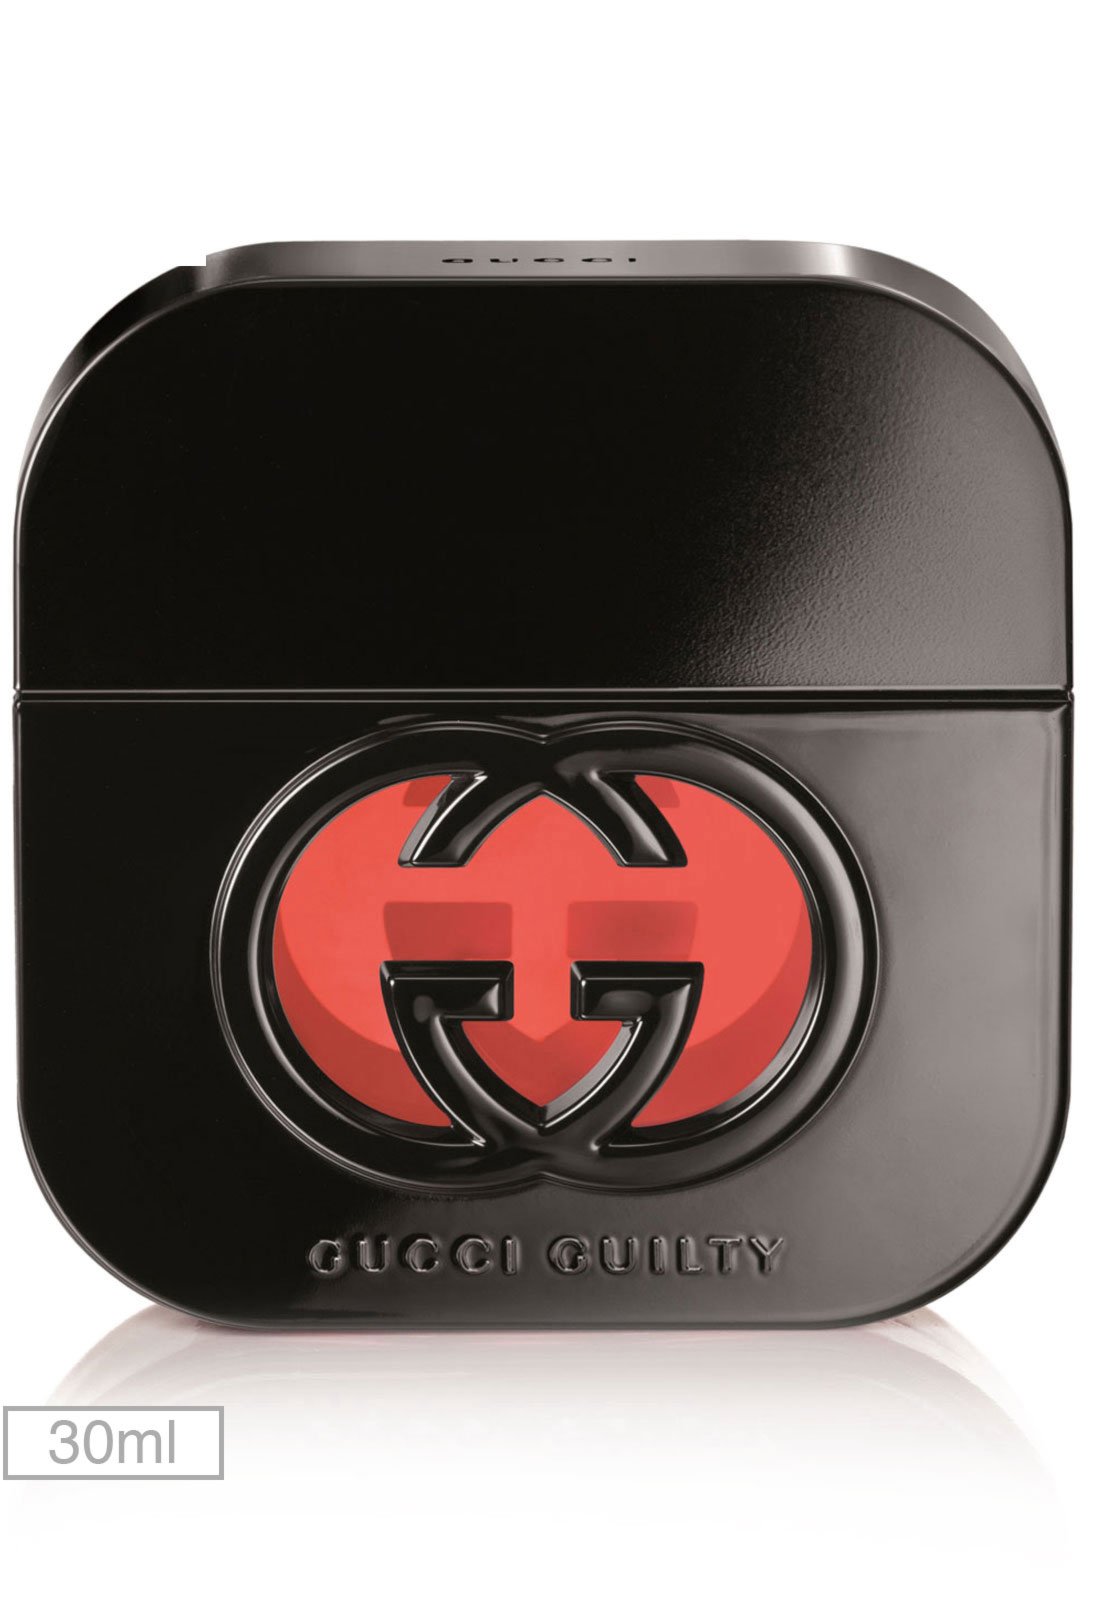 Perfume Guilty Black Gucci 50ml - Compre Agora